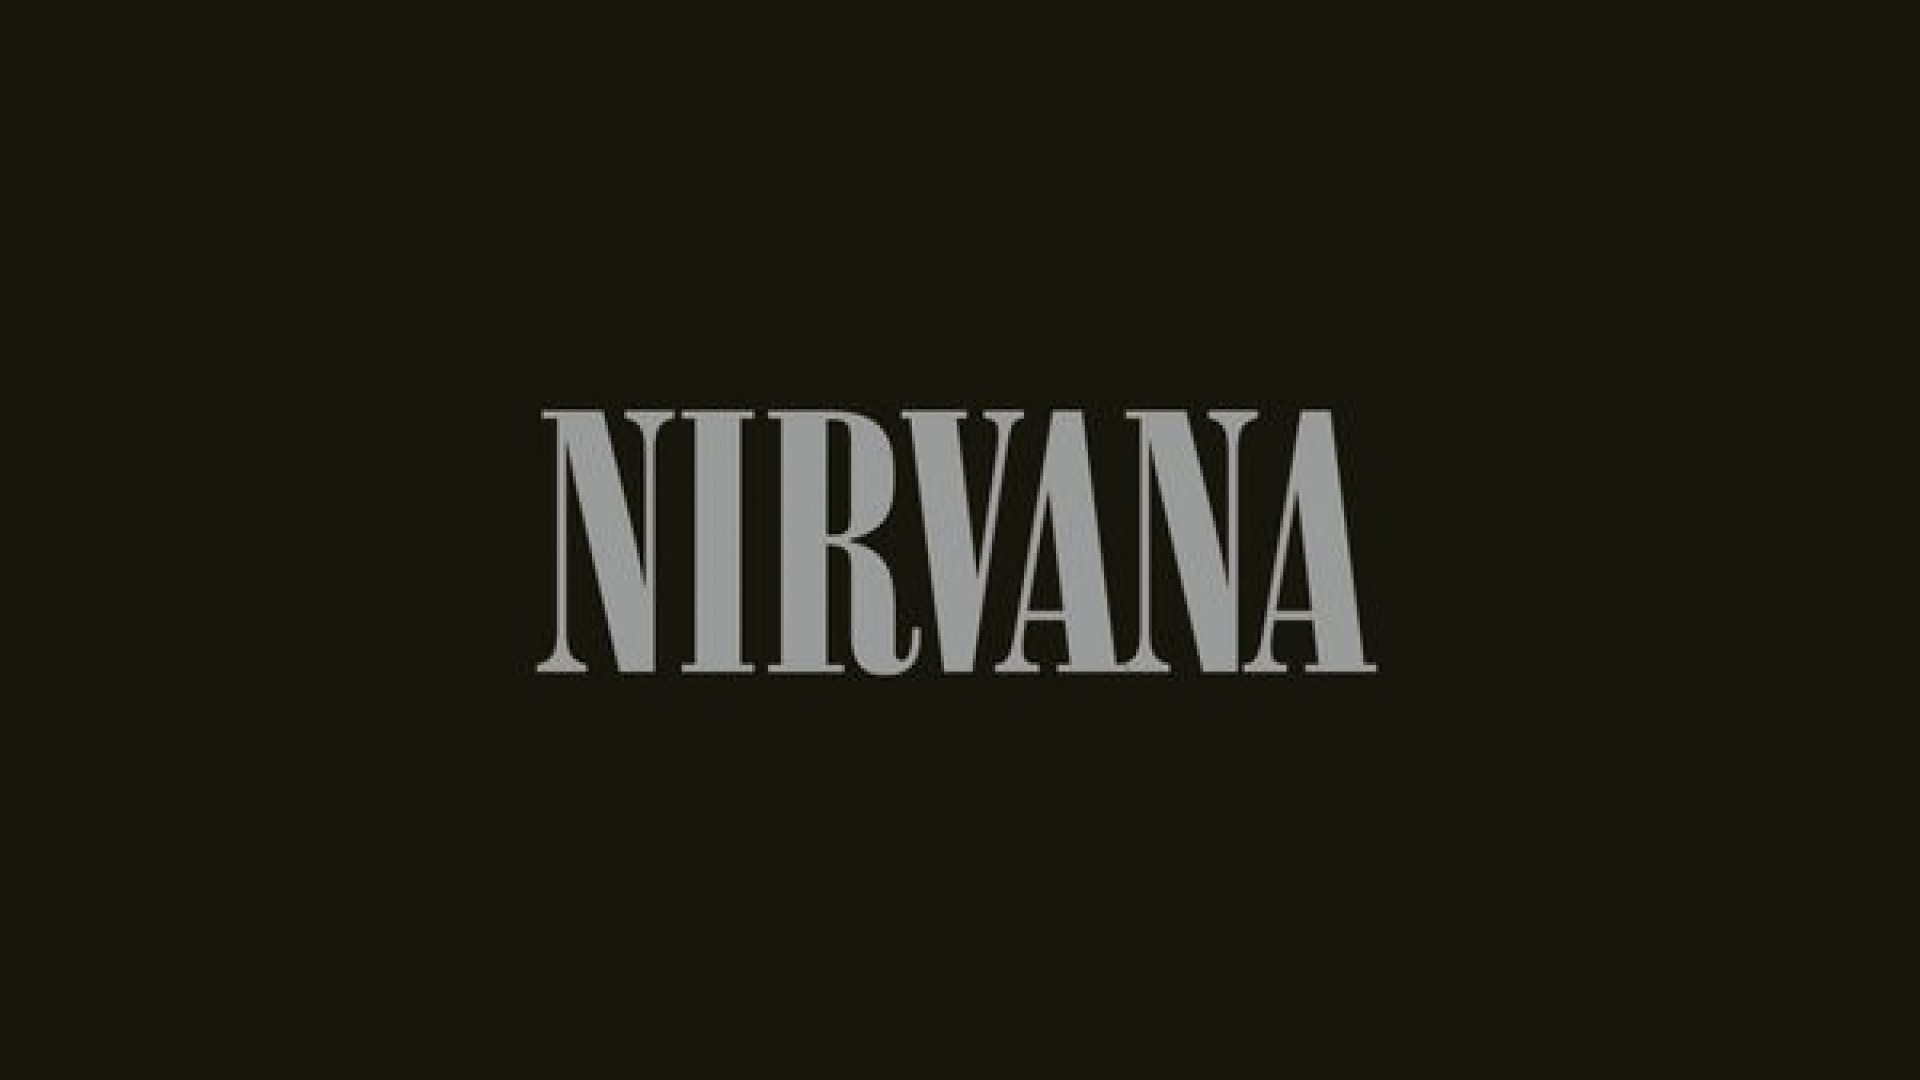 Nirvana, Album, Graphisme, Texte, Noir. Wallpaper in 1920x1080 Resolution